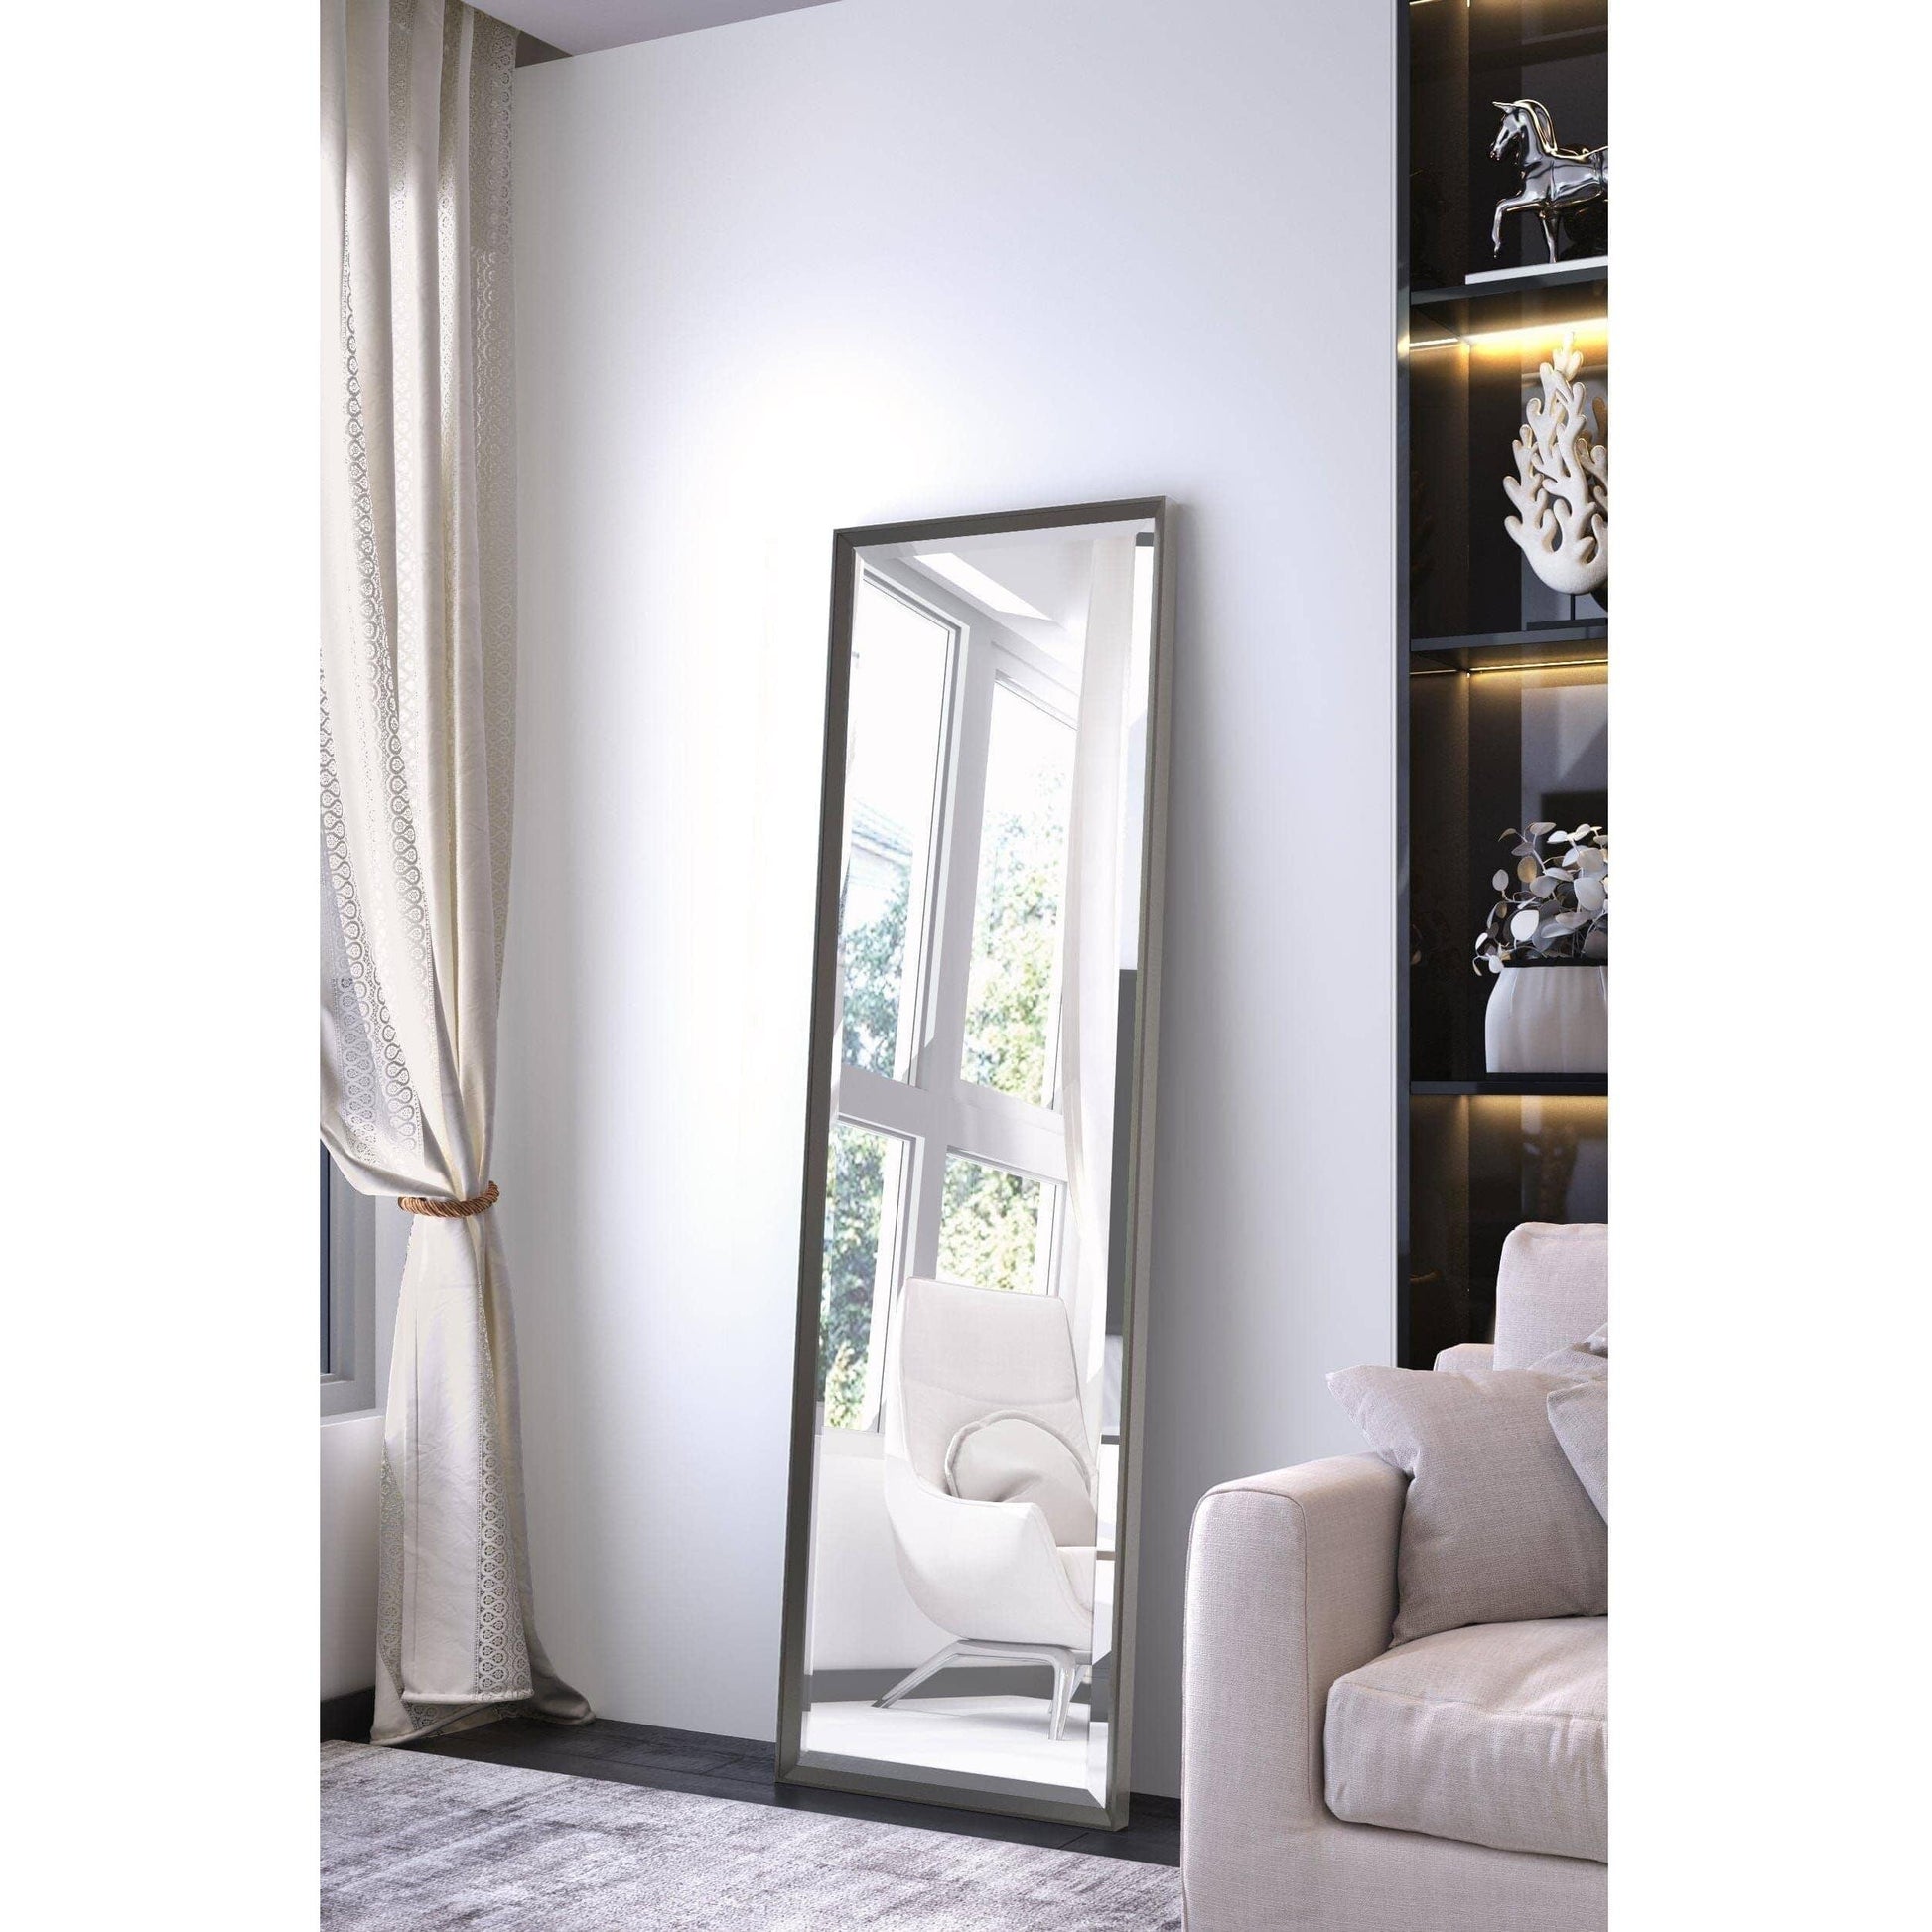 Bassett Mirror Skinny Black Lacquer Floor Mirror 22W x 74H Full-Length Mirror, Floor Mirror, Full Body Mirror, Large Mirror Bassett Mirror Company 